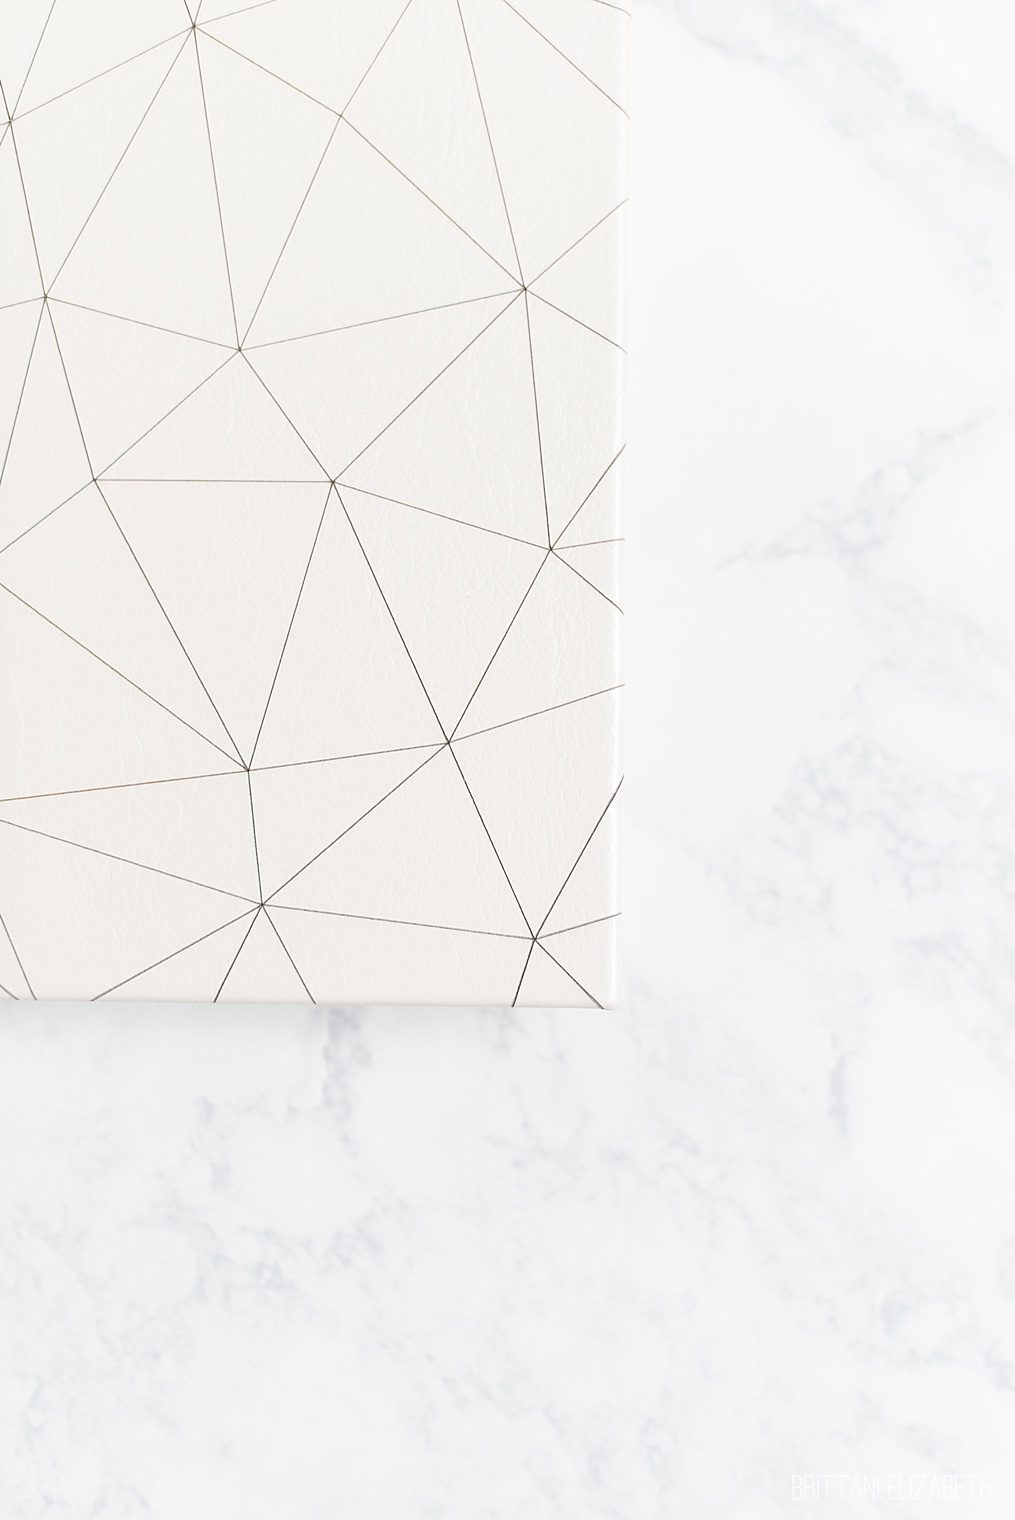 geometric-white-leather-wedding-album-0007